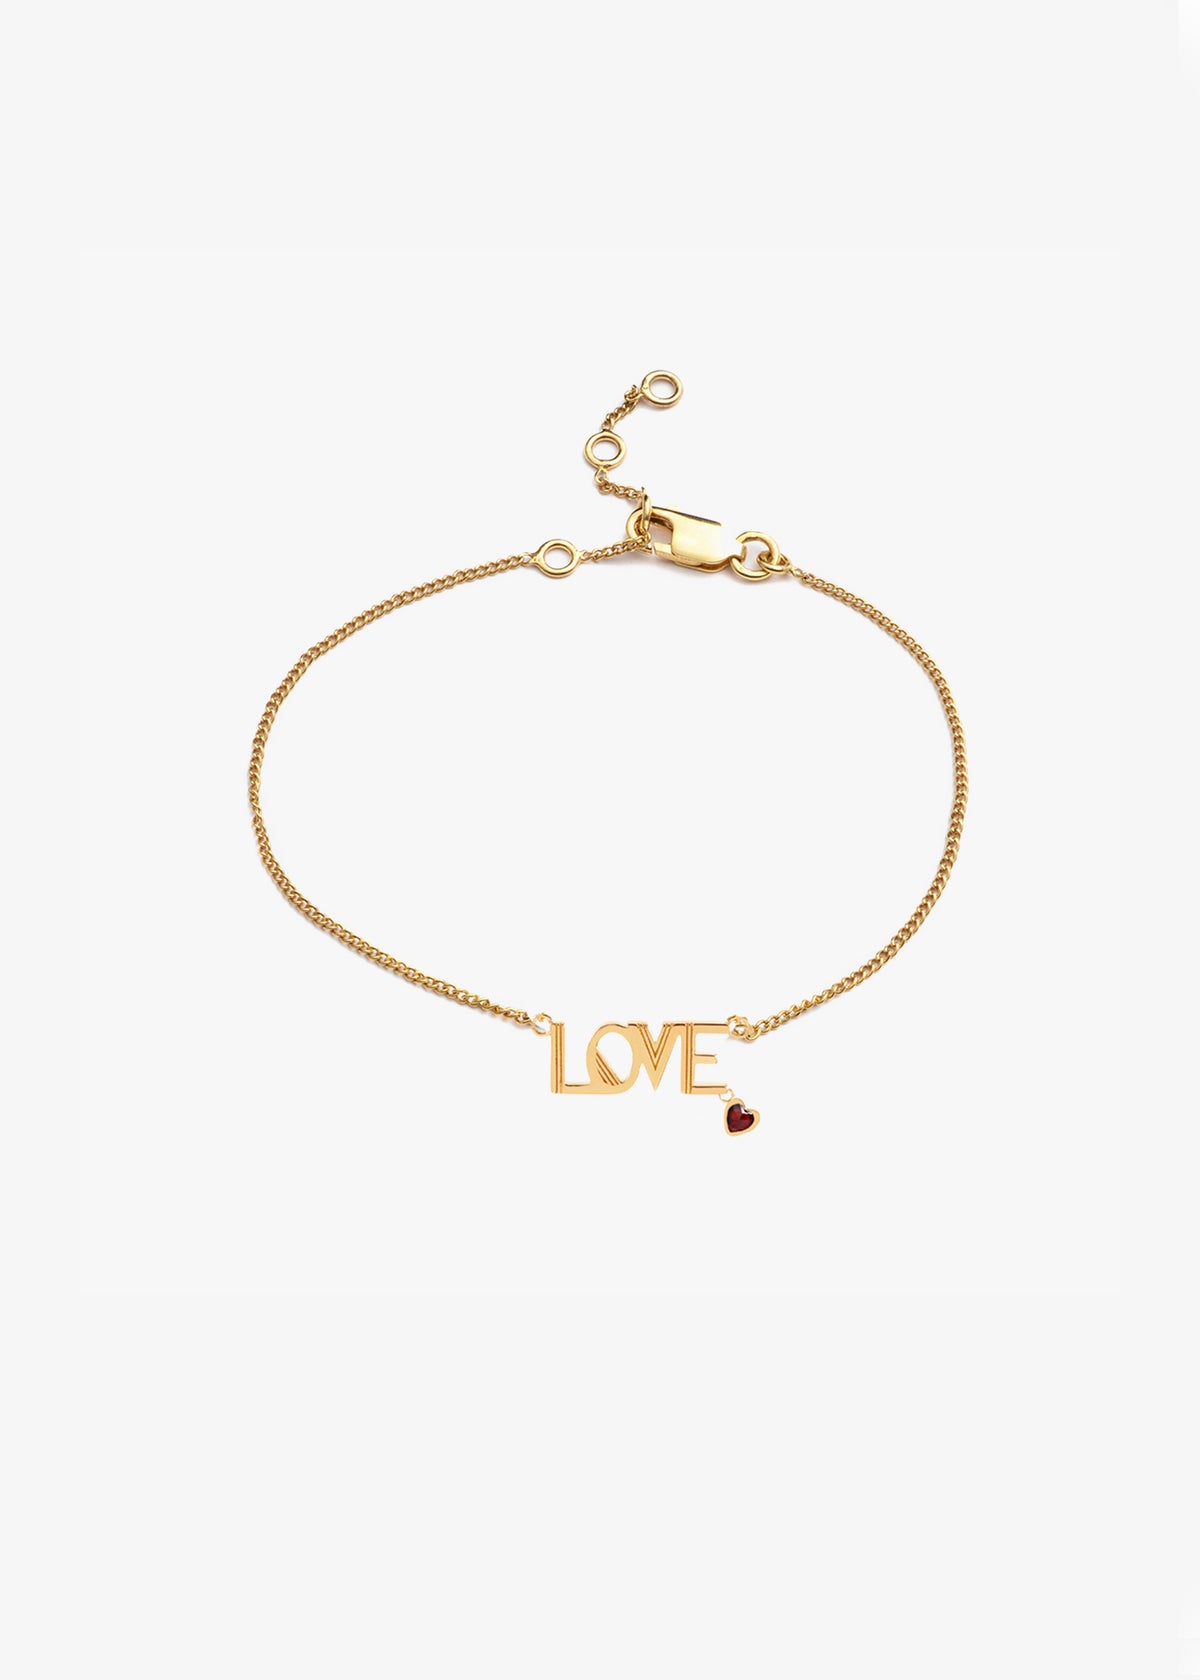 Choose Love Charity Bracelet